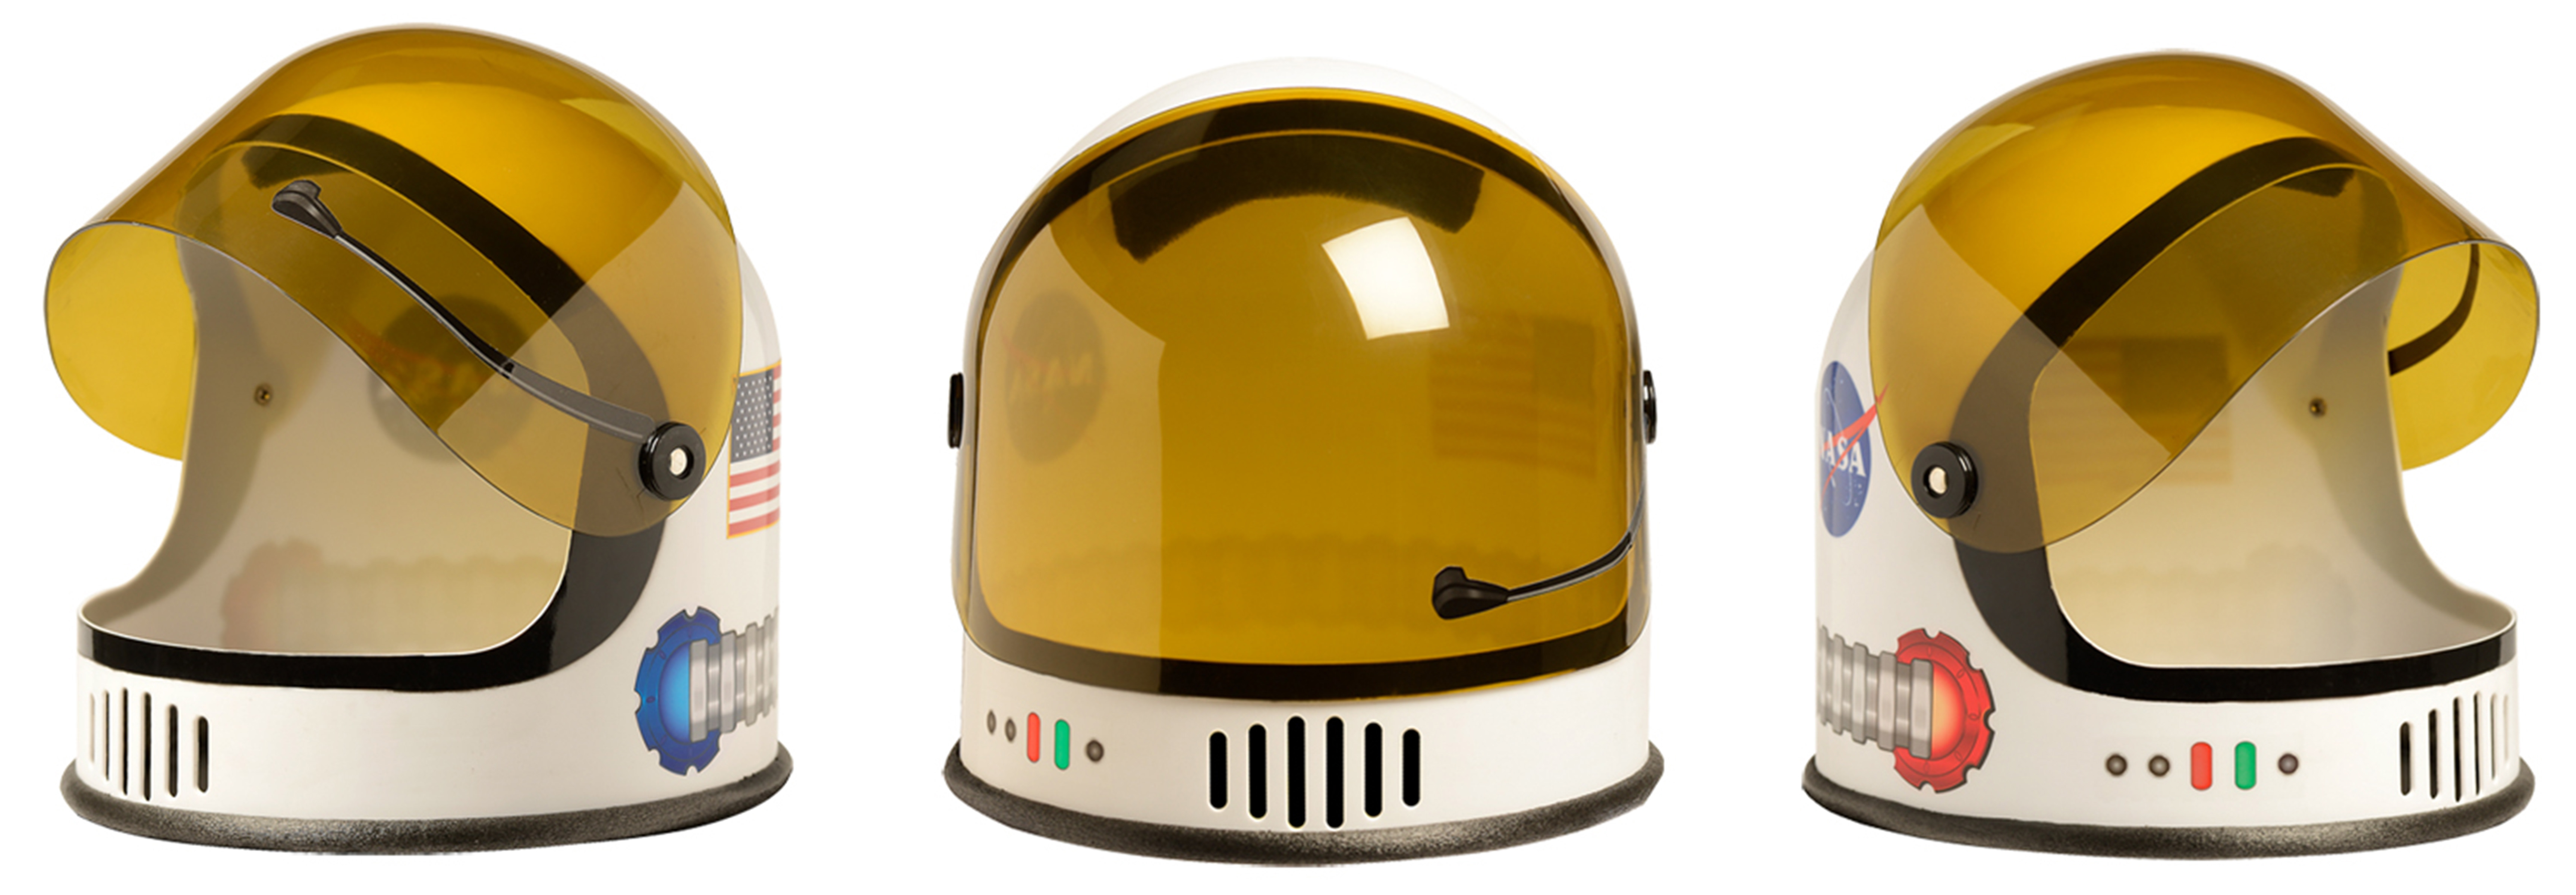 Auggie Astronaut Helmet Wonder / The Astronaut Helmet in Wonder. By